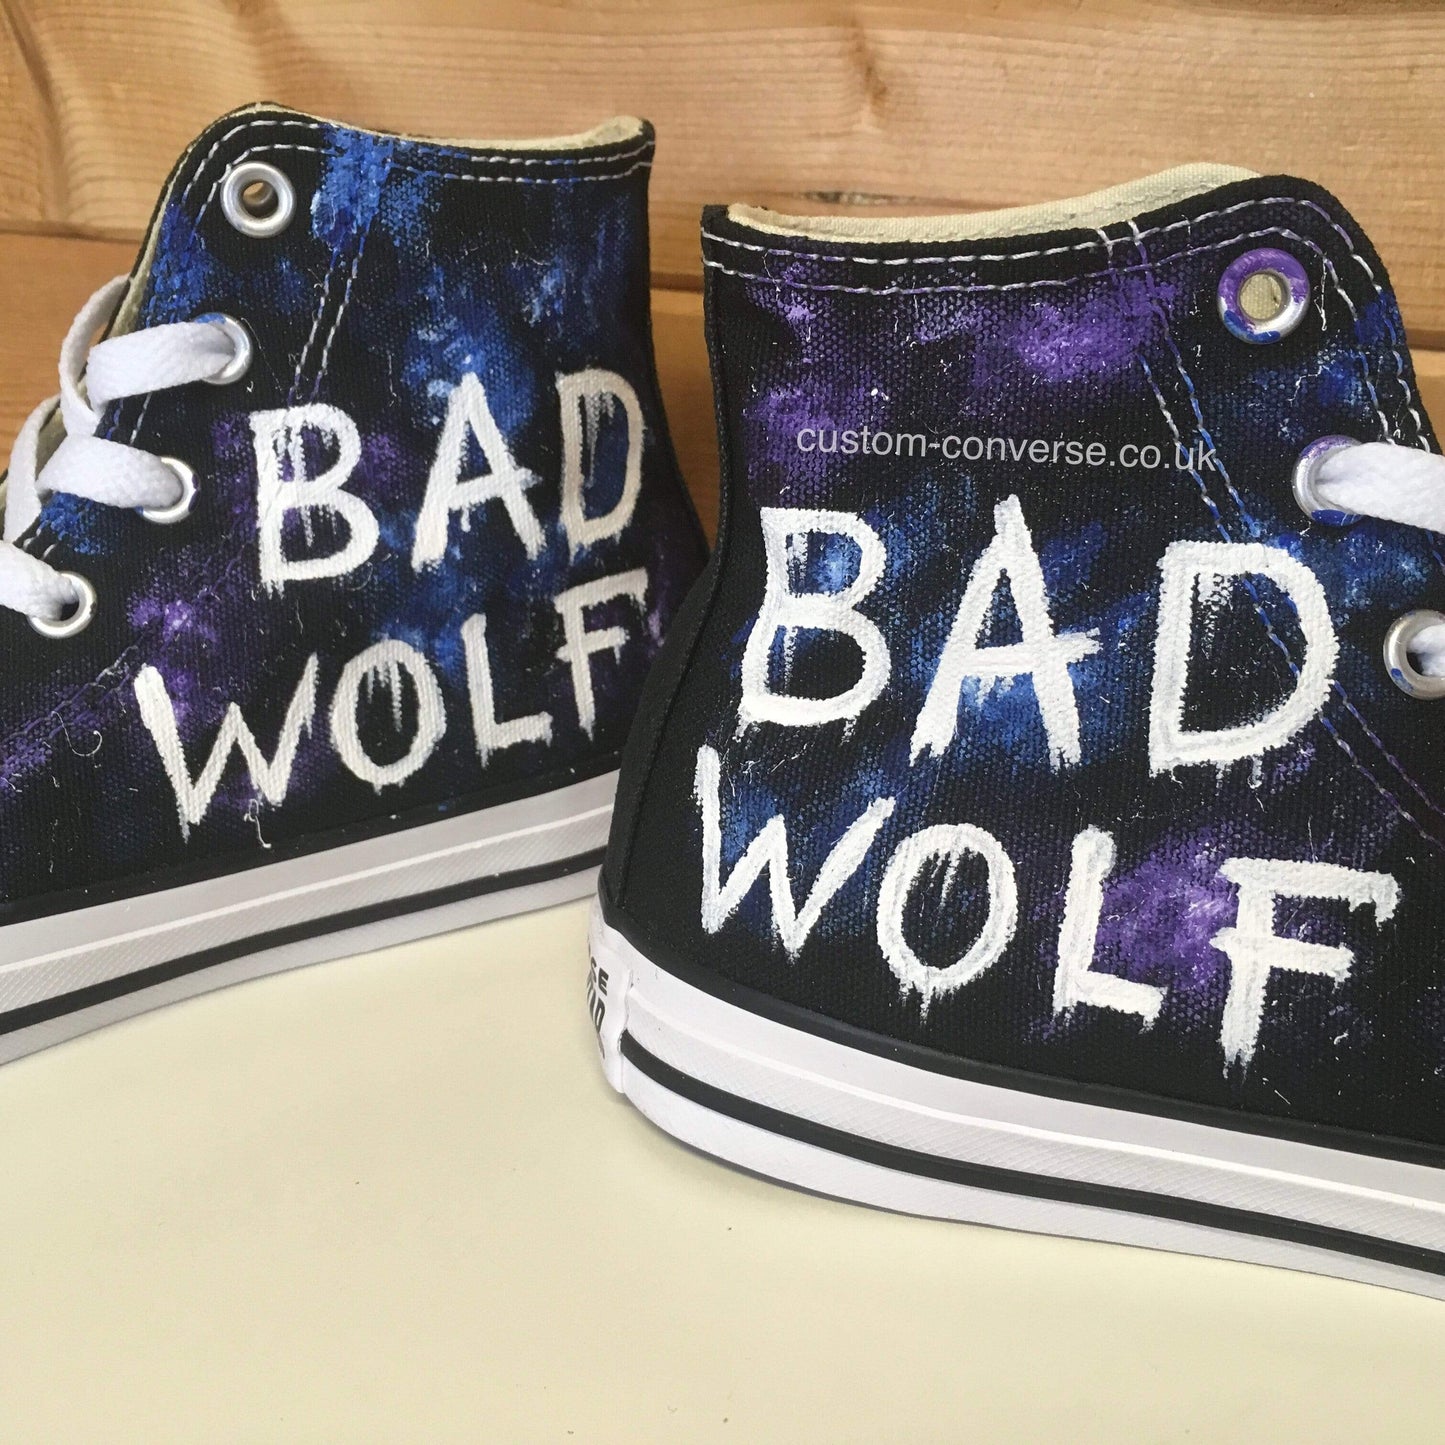 BAD WOLF Galaxy - Custom Converse Ltd.